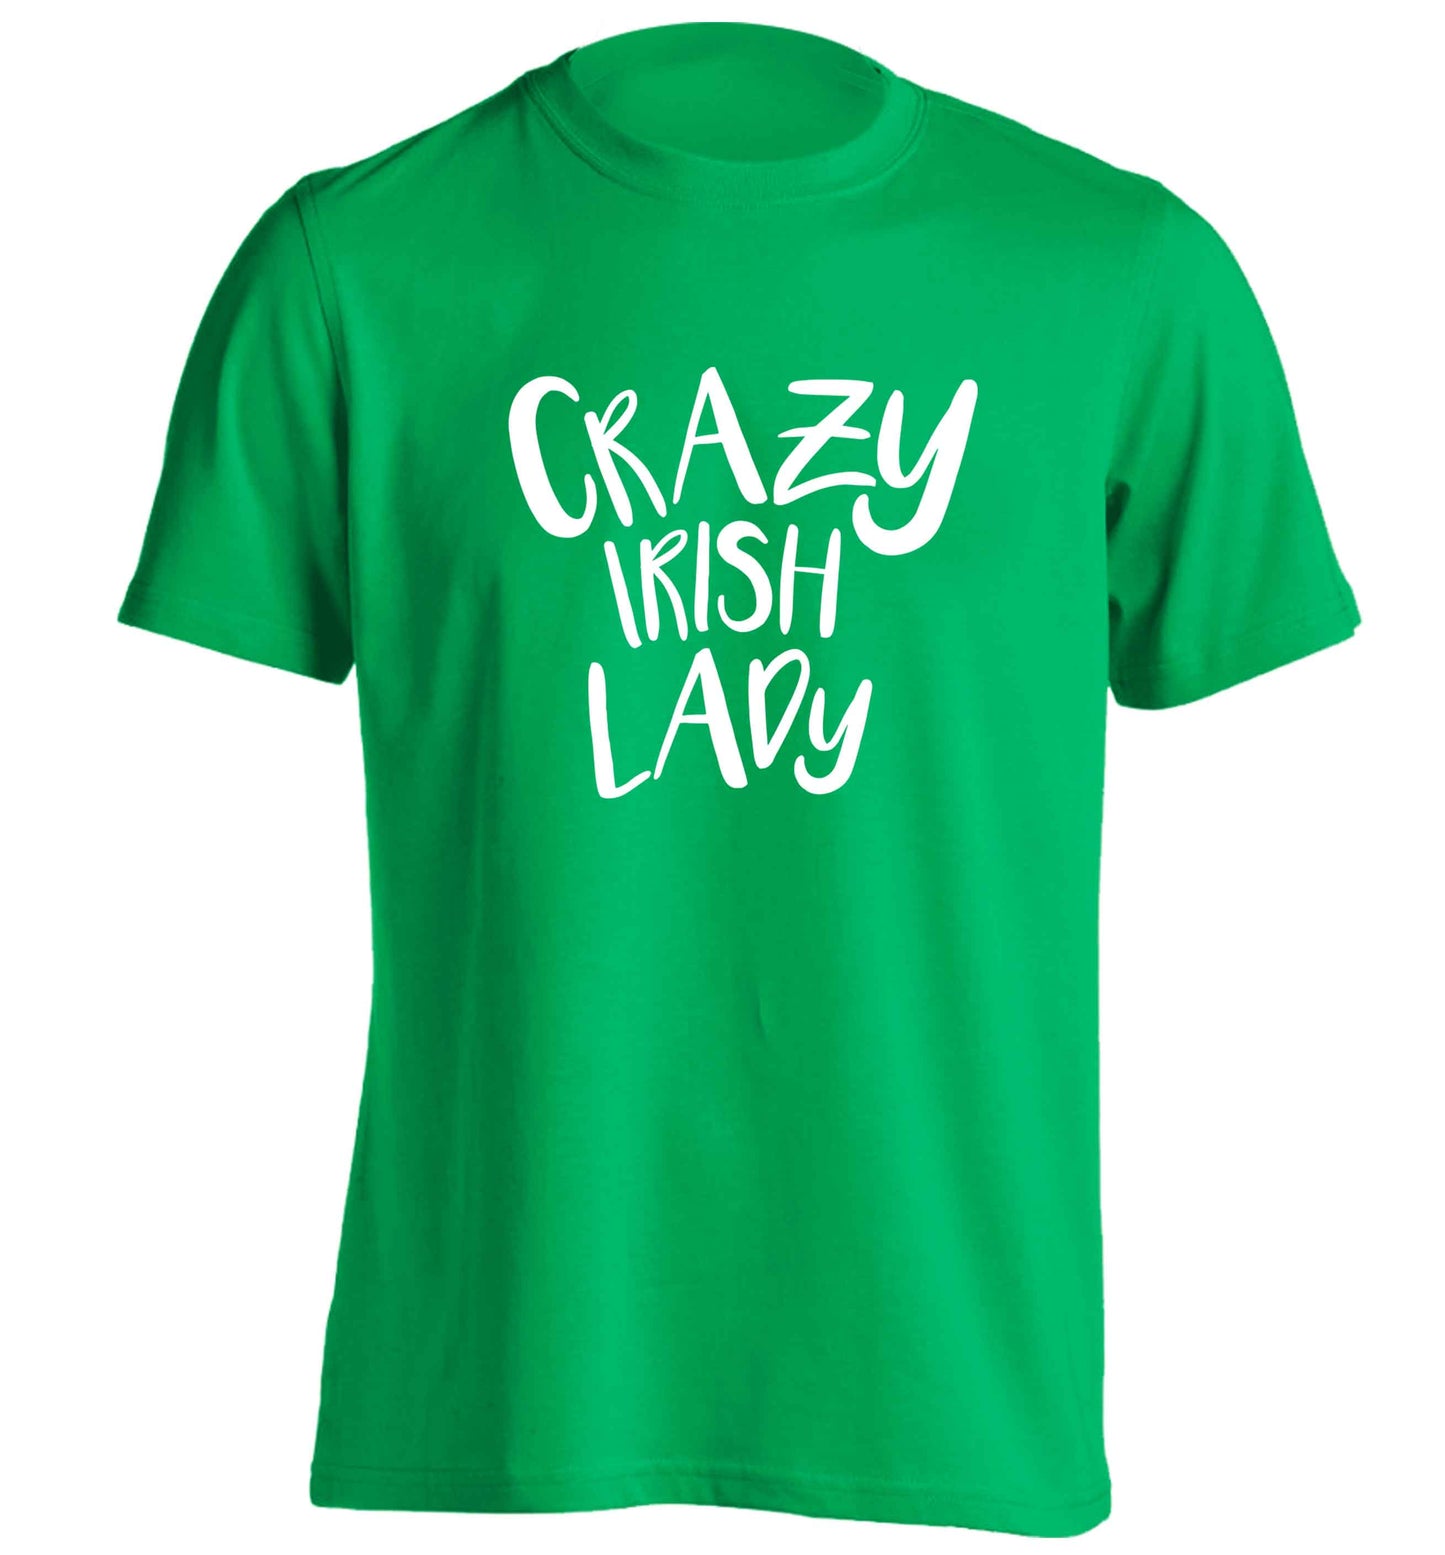 Crazy Irish lady adults unisex green Tshirt 2XL